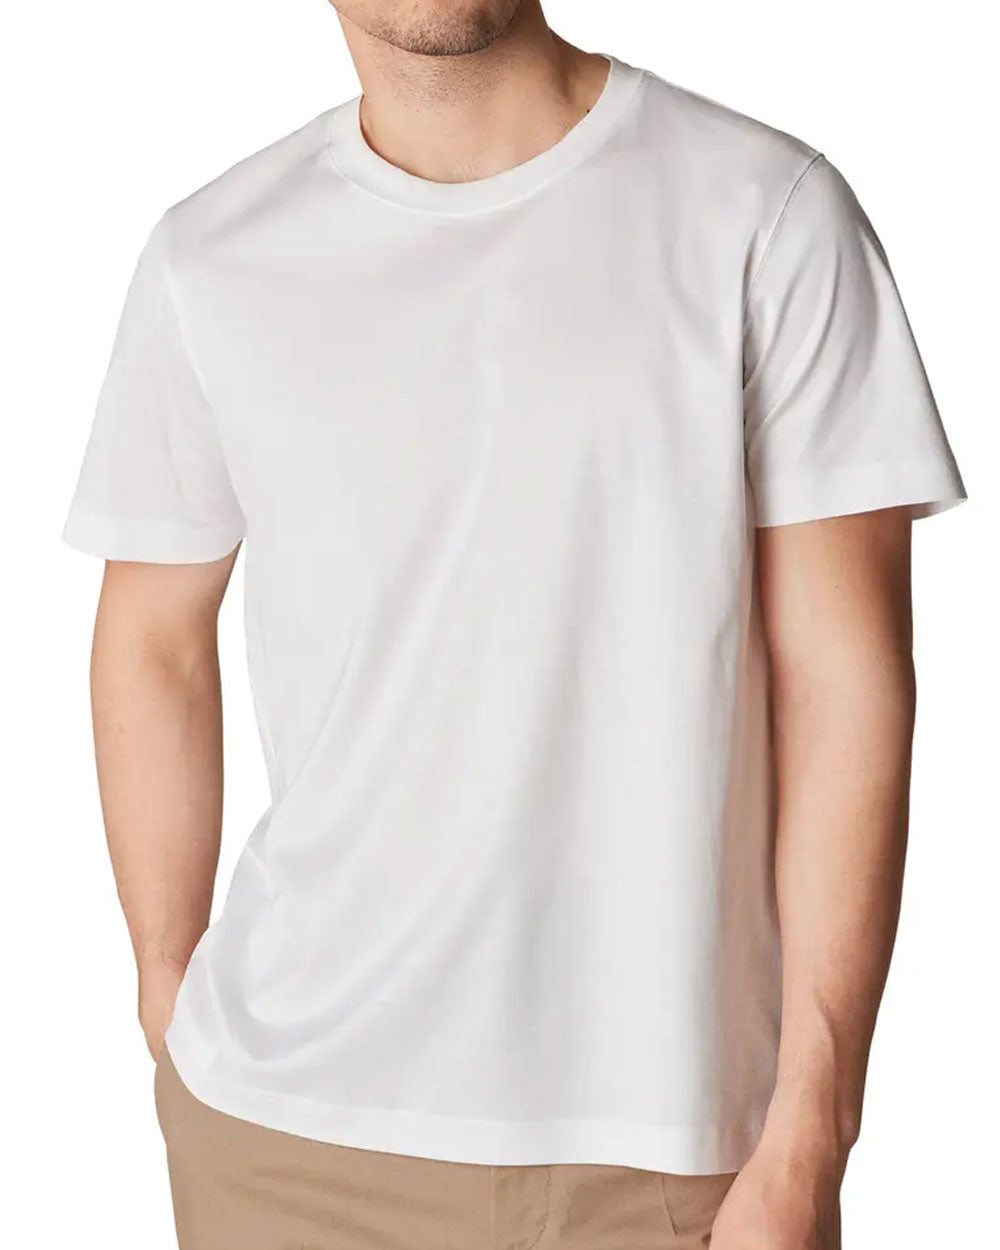 White Jersey T-Shirt